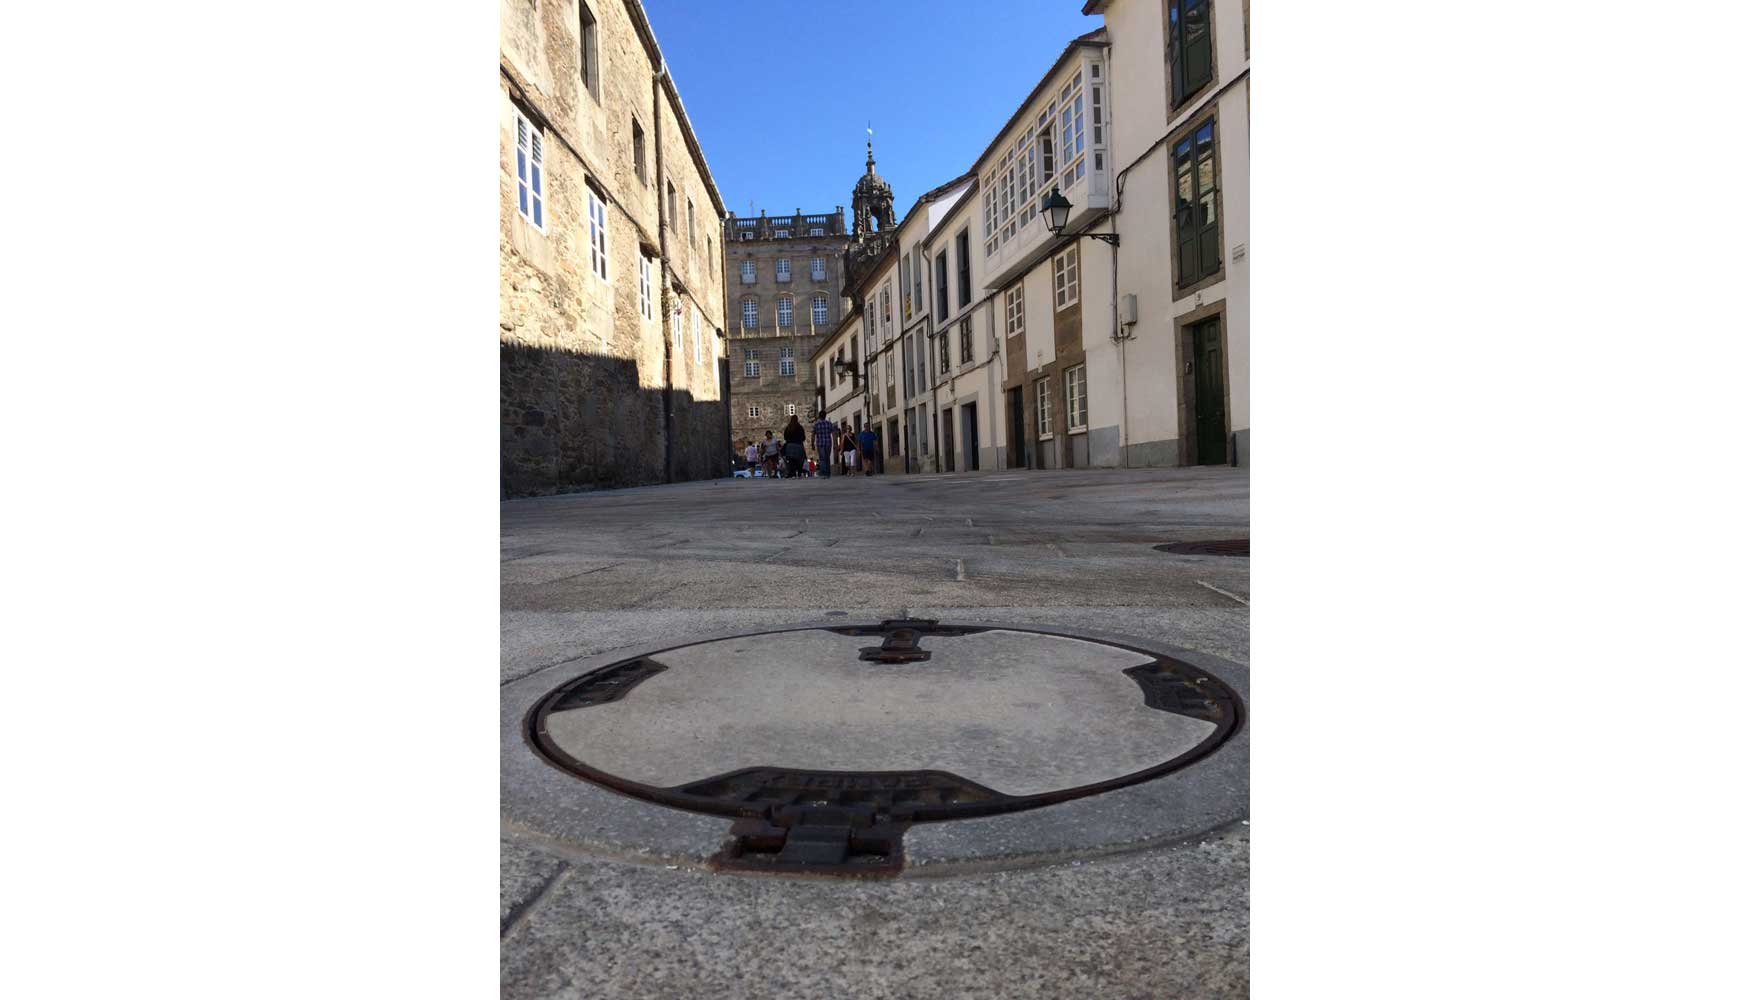 La Ra Carretas est situada muy cerca de la catedral de Santiago de Compostela